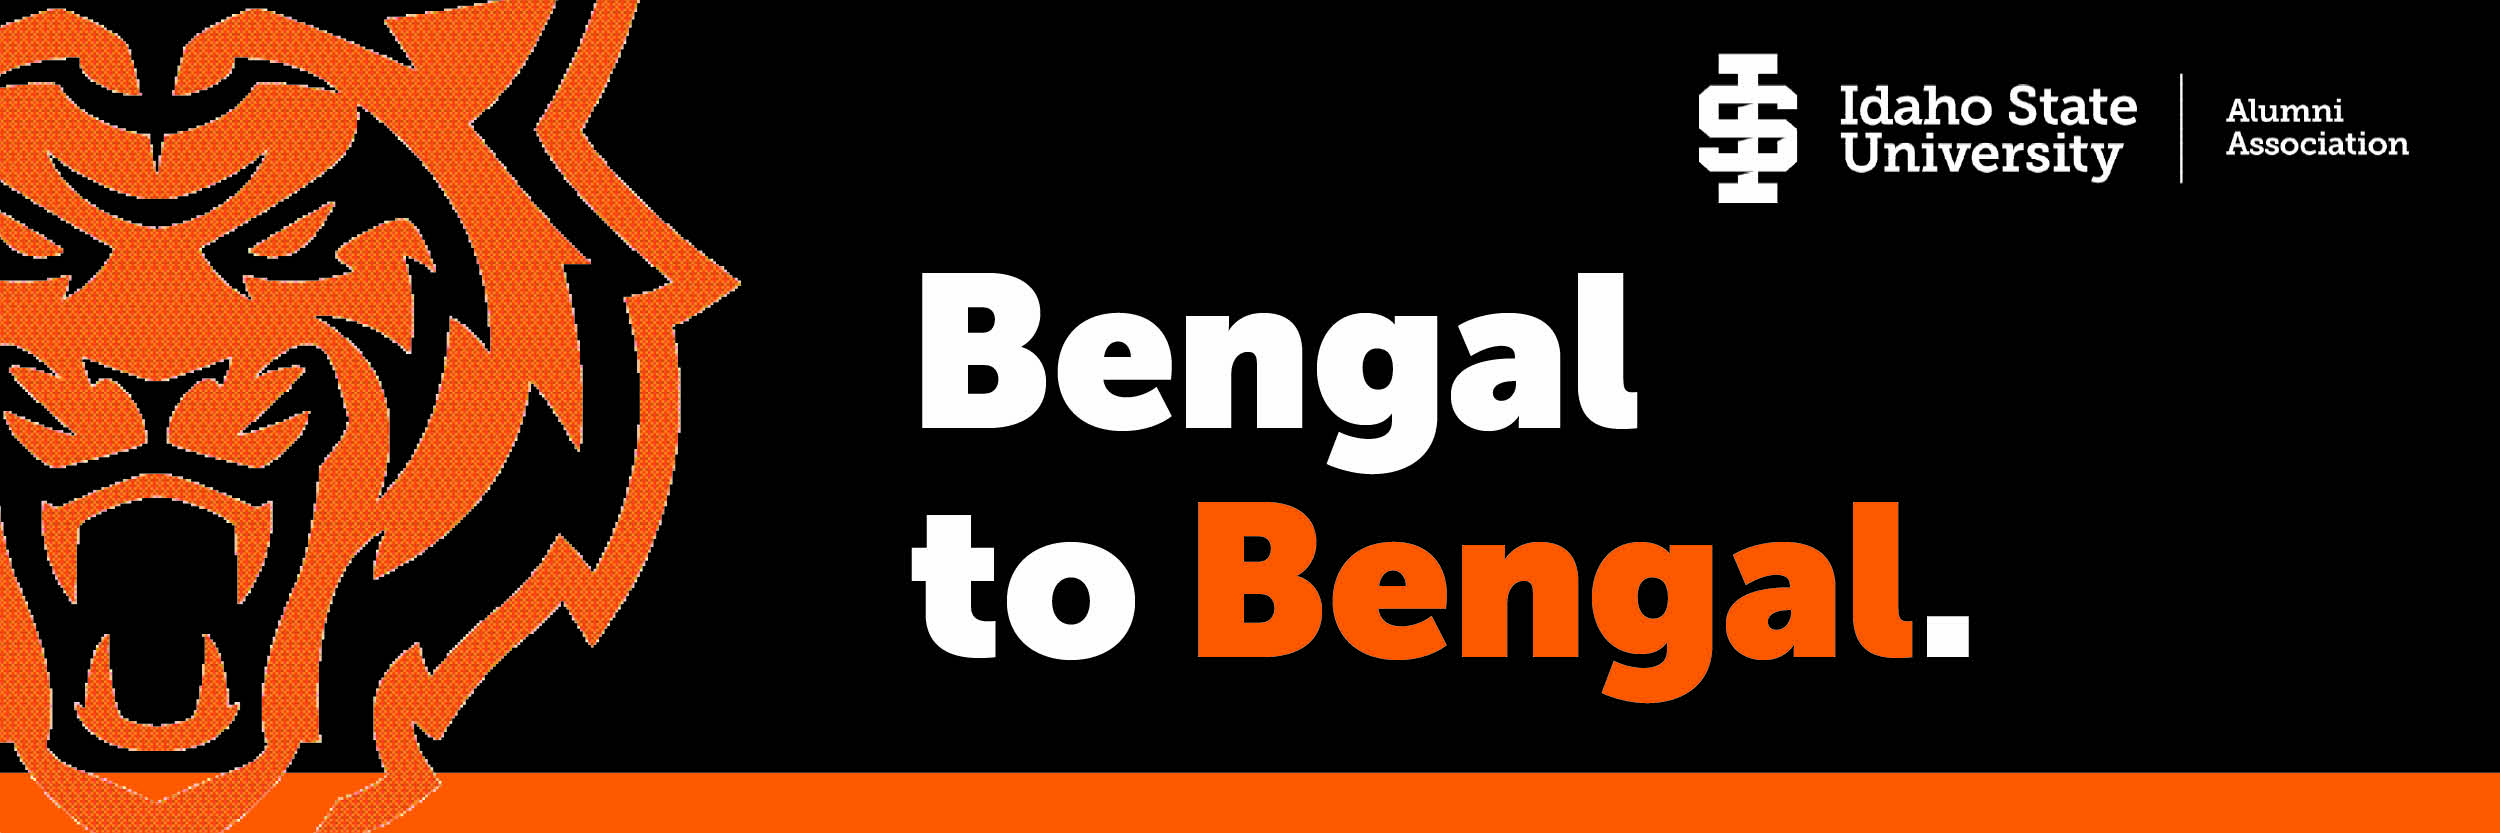 Bengal to Bengal header image with ISUAA logo and Bengal head